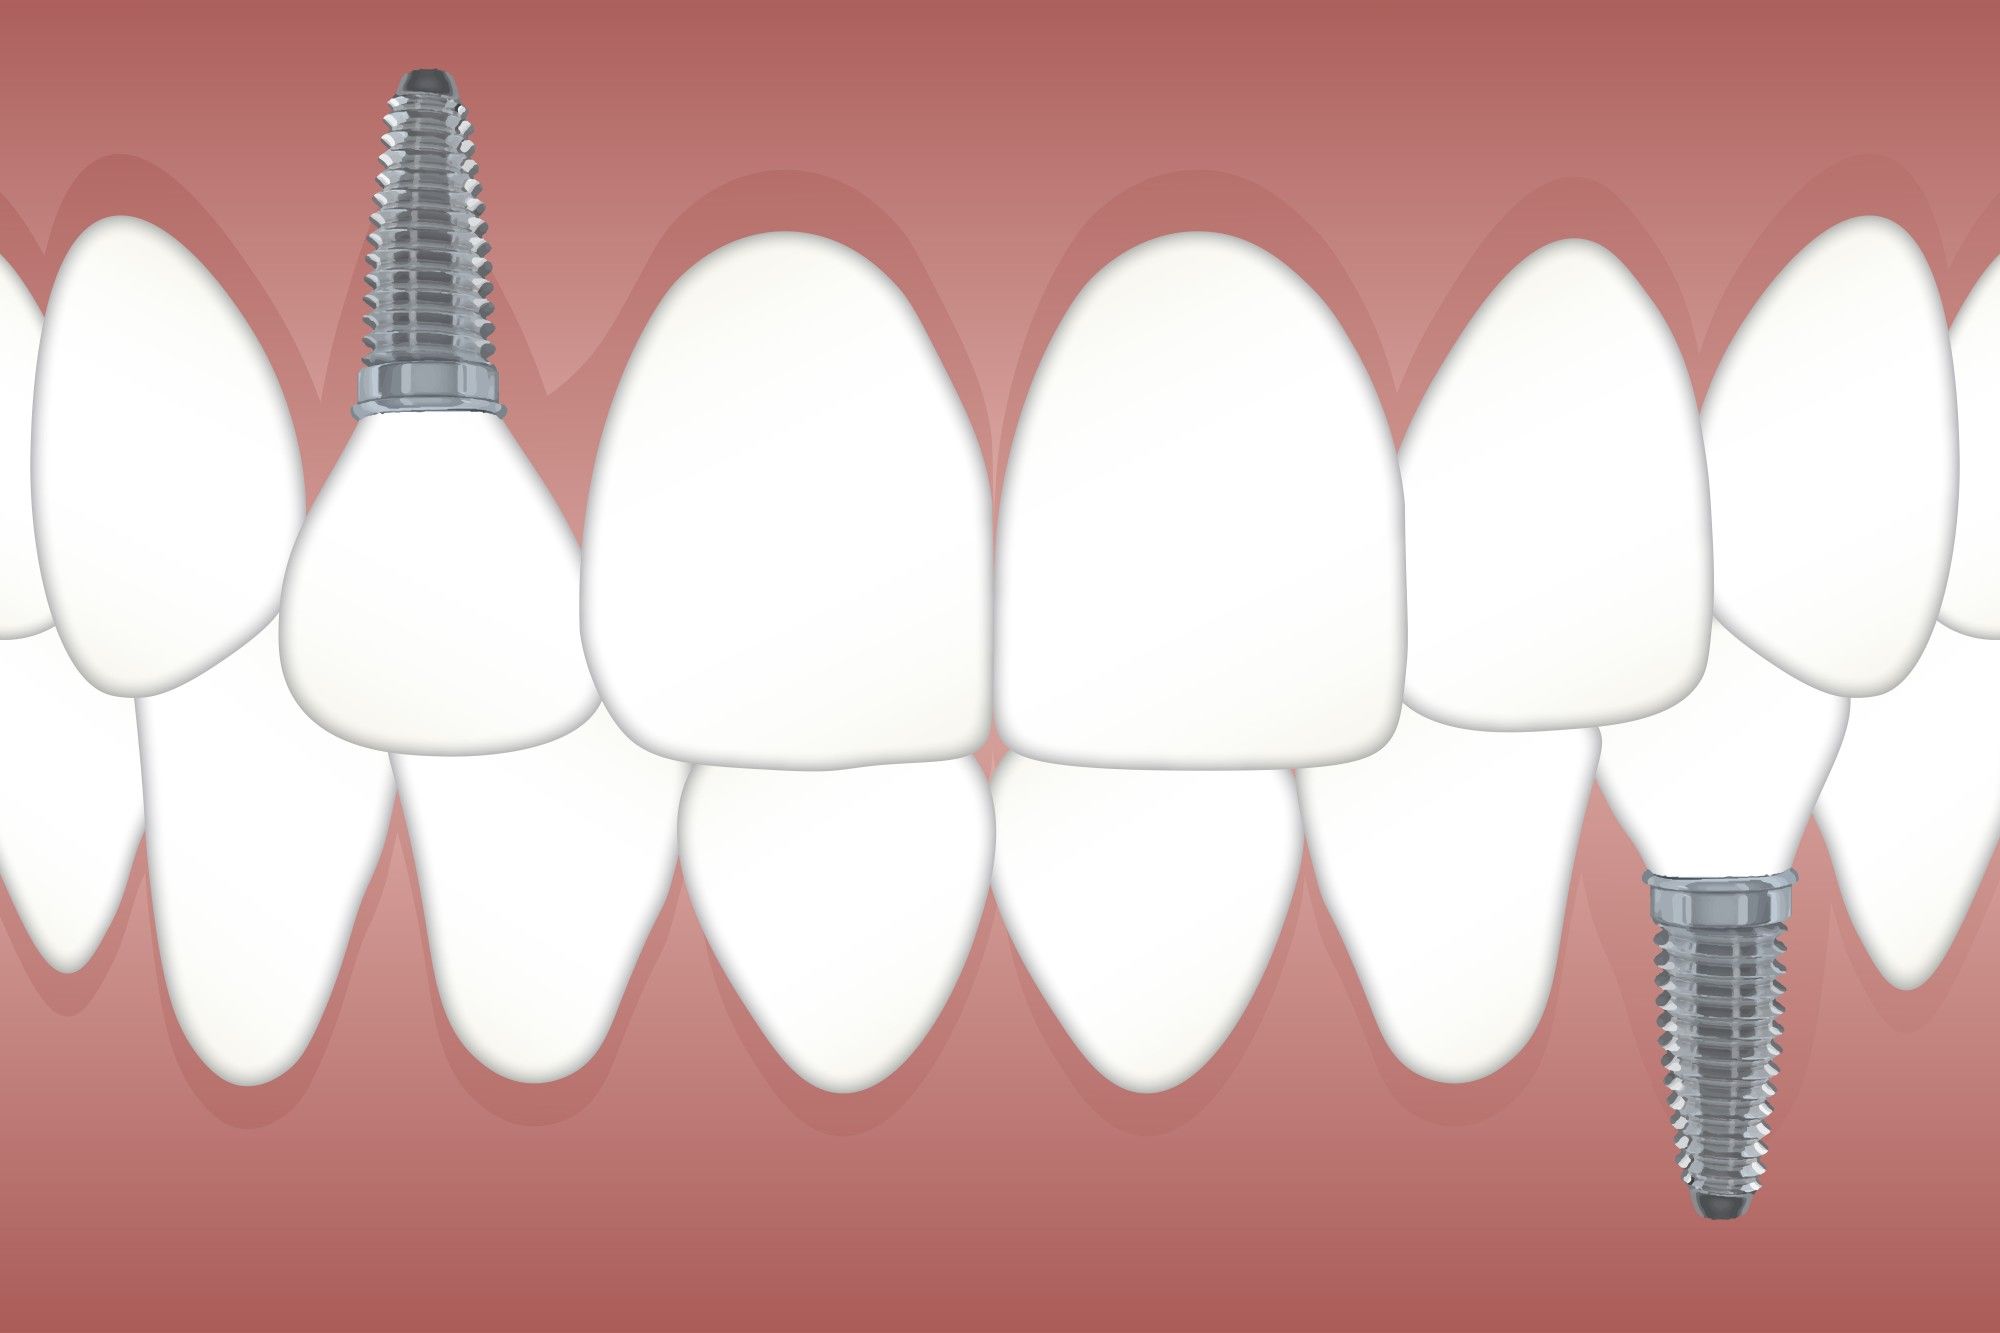 permanent-teeth-replacement-options-dental-implants-gordon-dental